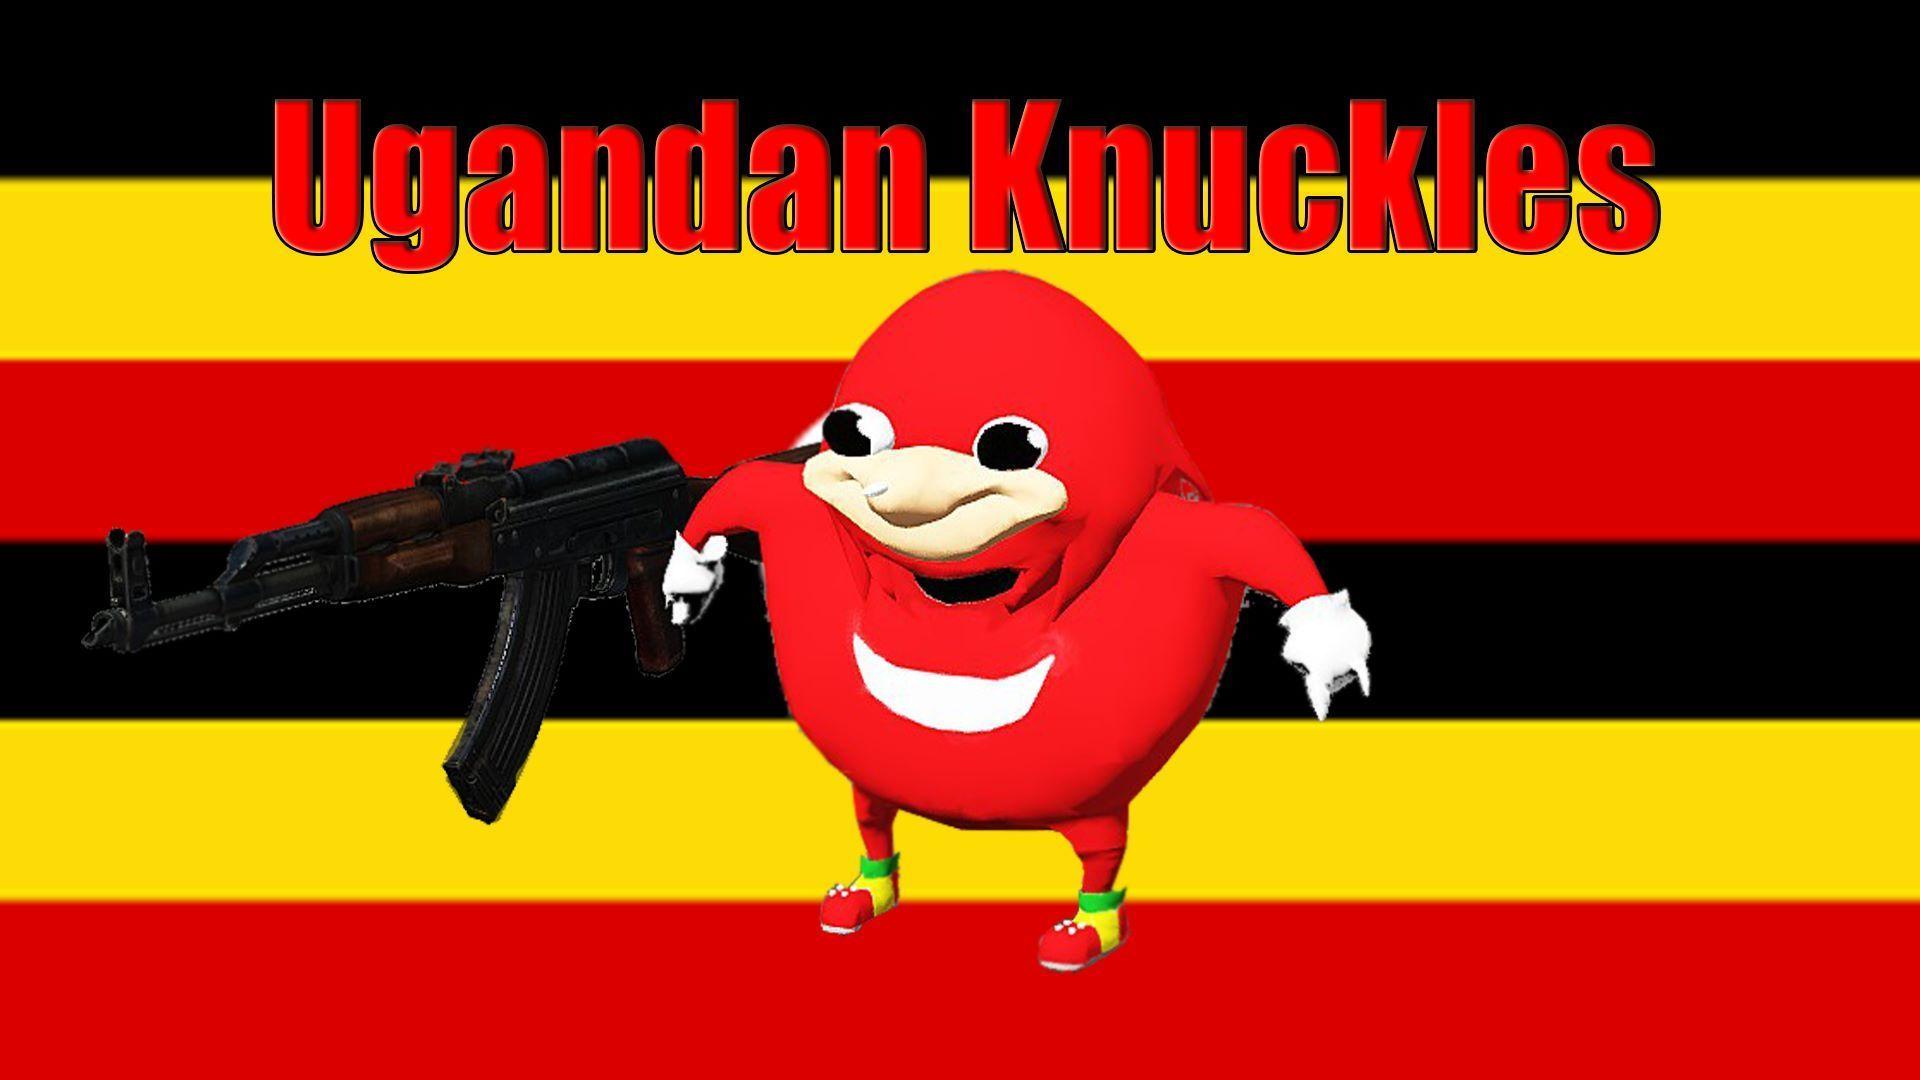 Uganda Knuckles Wallpapers - Top Free Uganda Knuckles Backgrounds ...